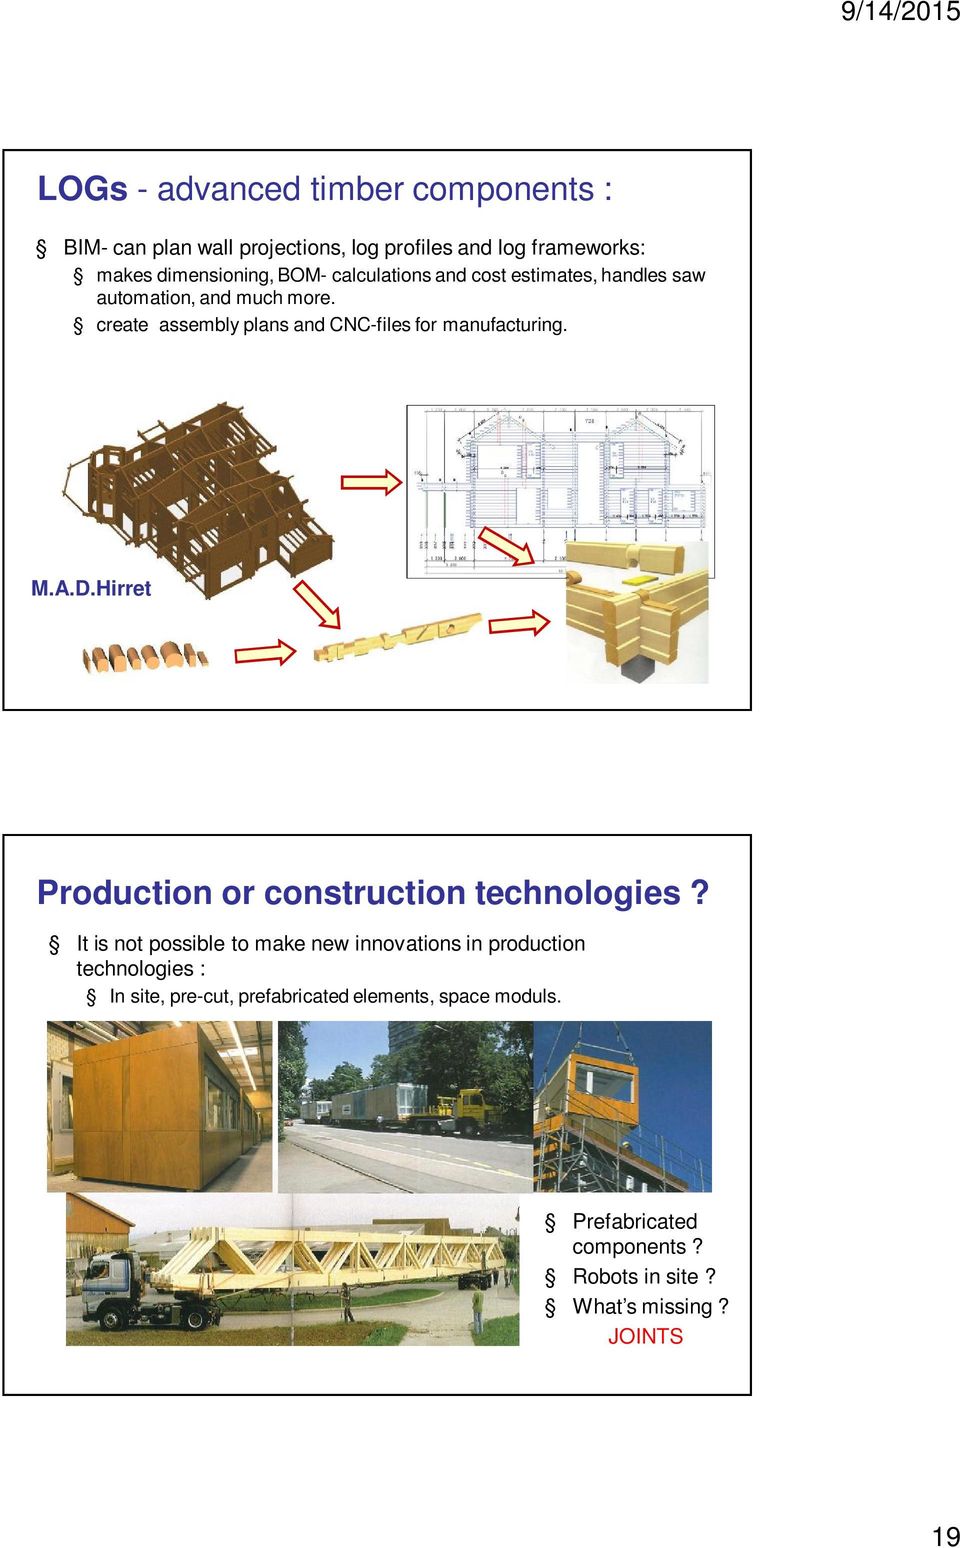 M.A.D.Hirret Production or construction technologies?